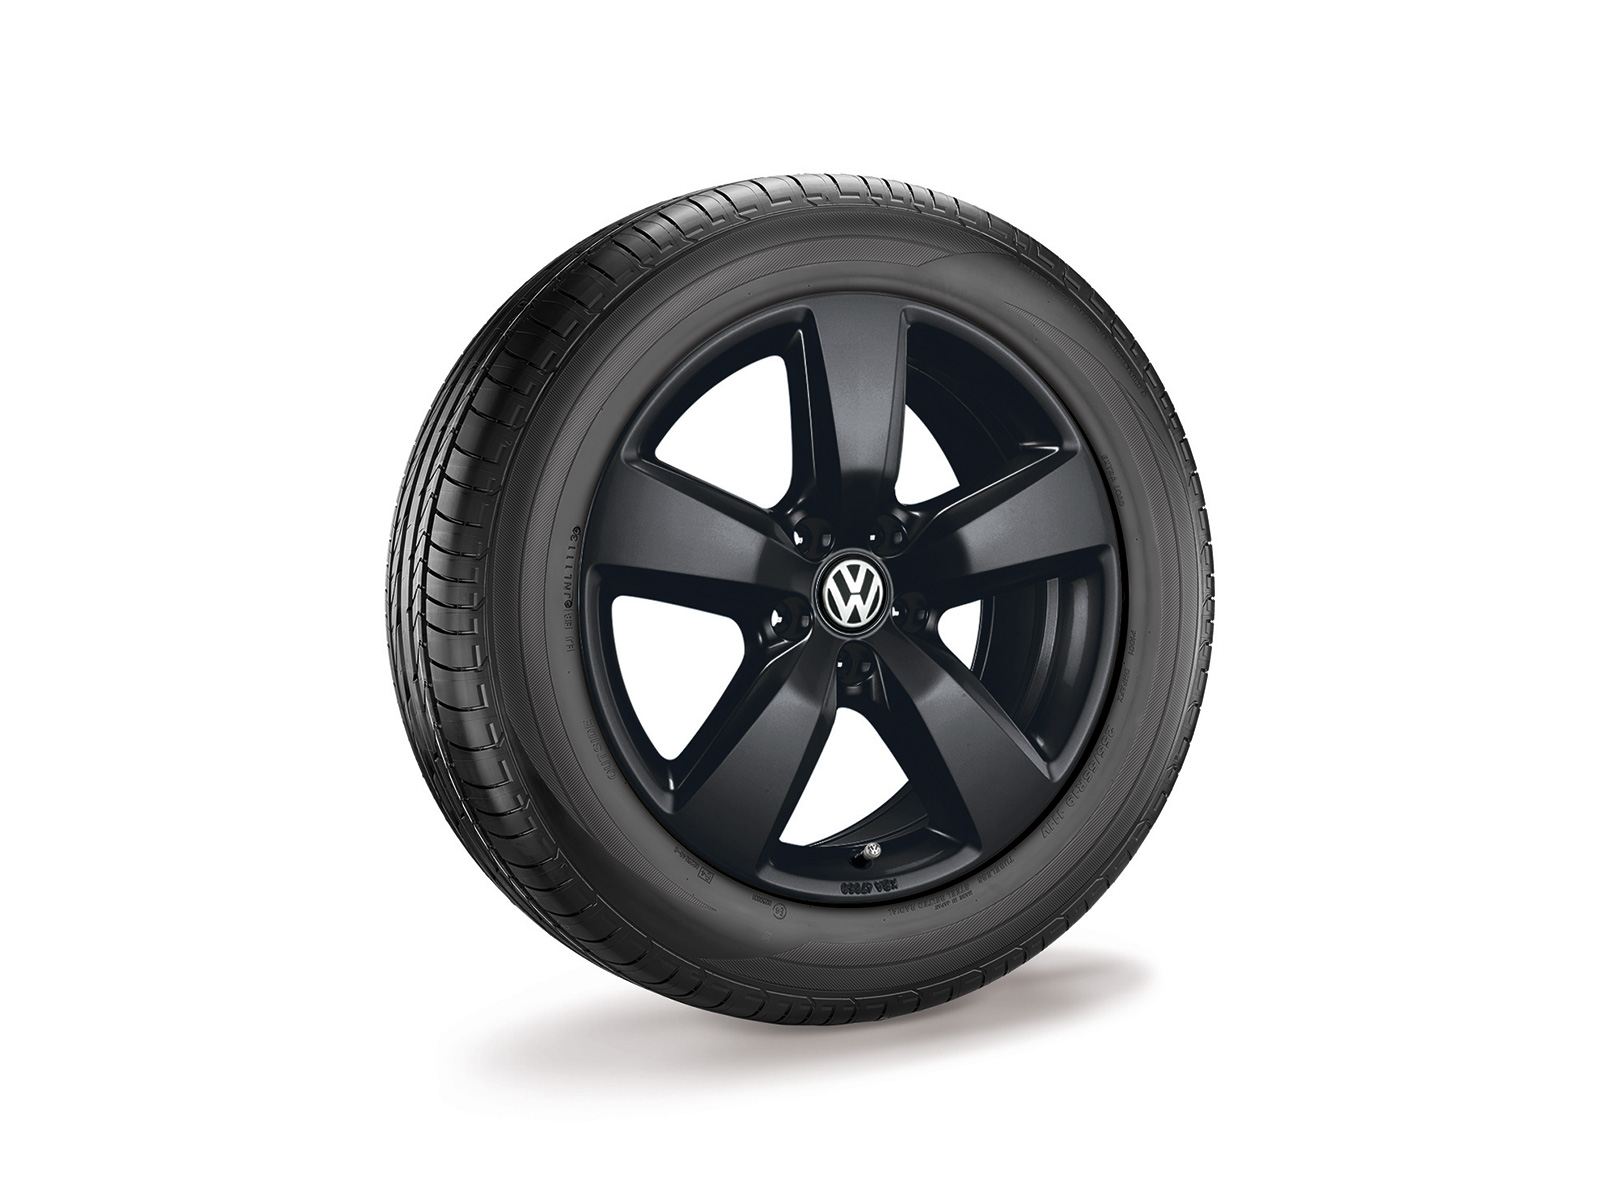 19" Aragonite alloy wheel